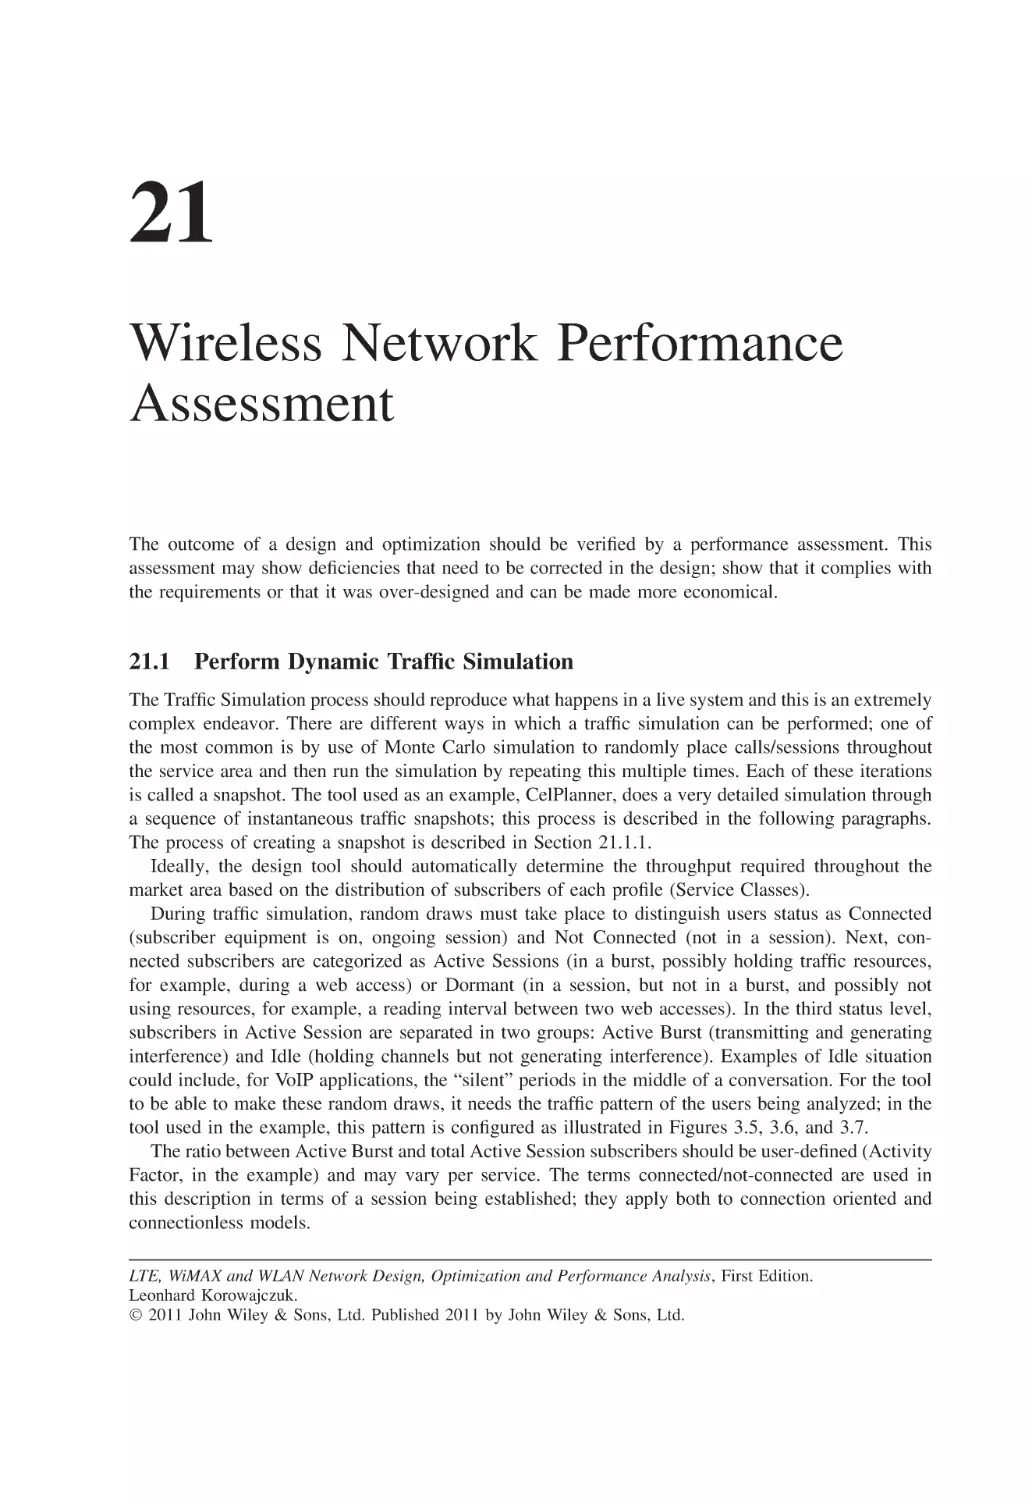 21 Wireless Network Performance Assessment
21.1 Perform Dynamic Traffic Simulation